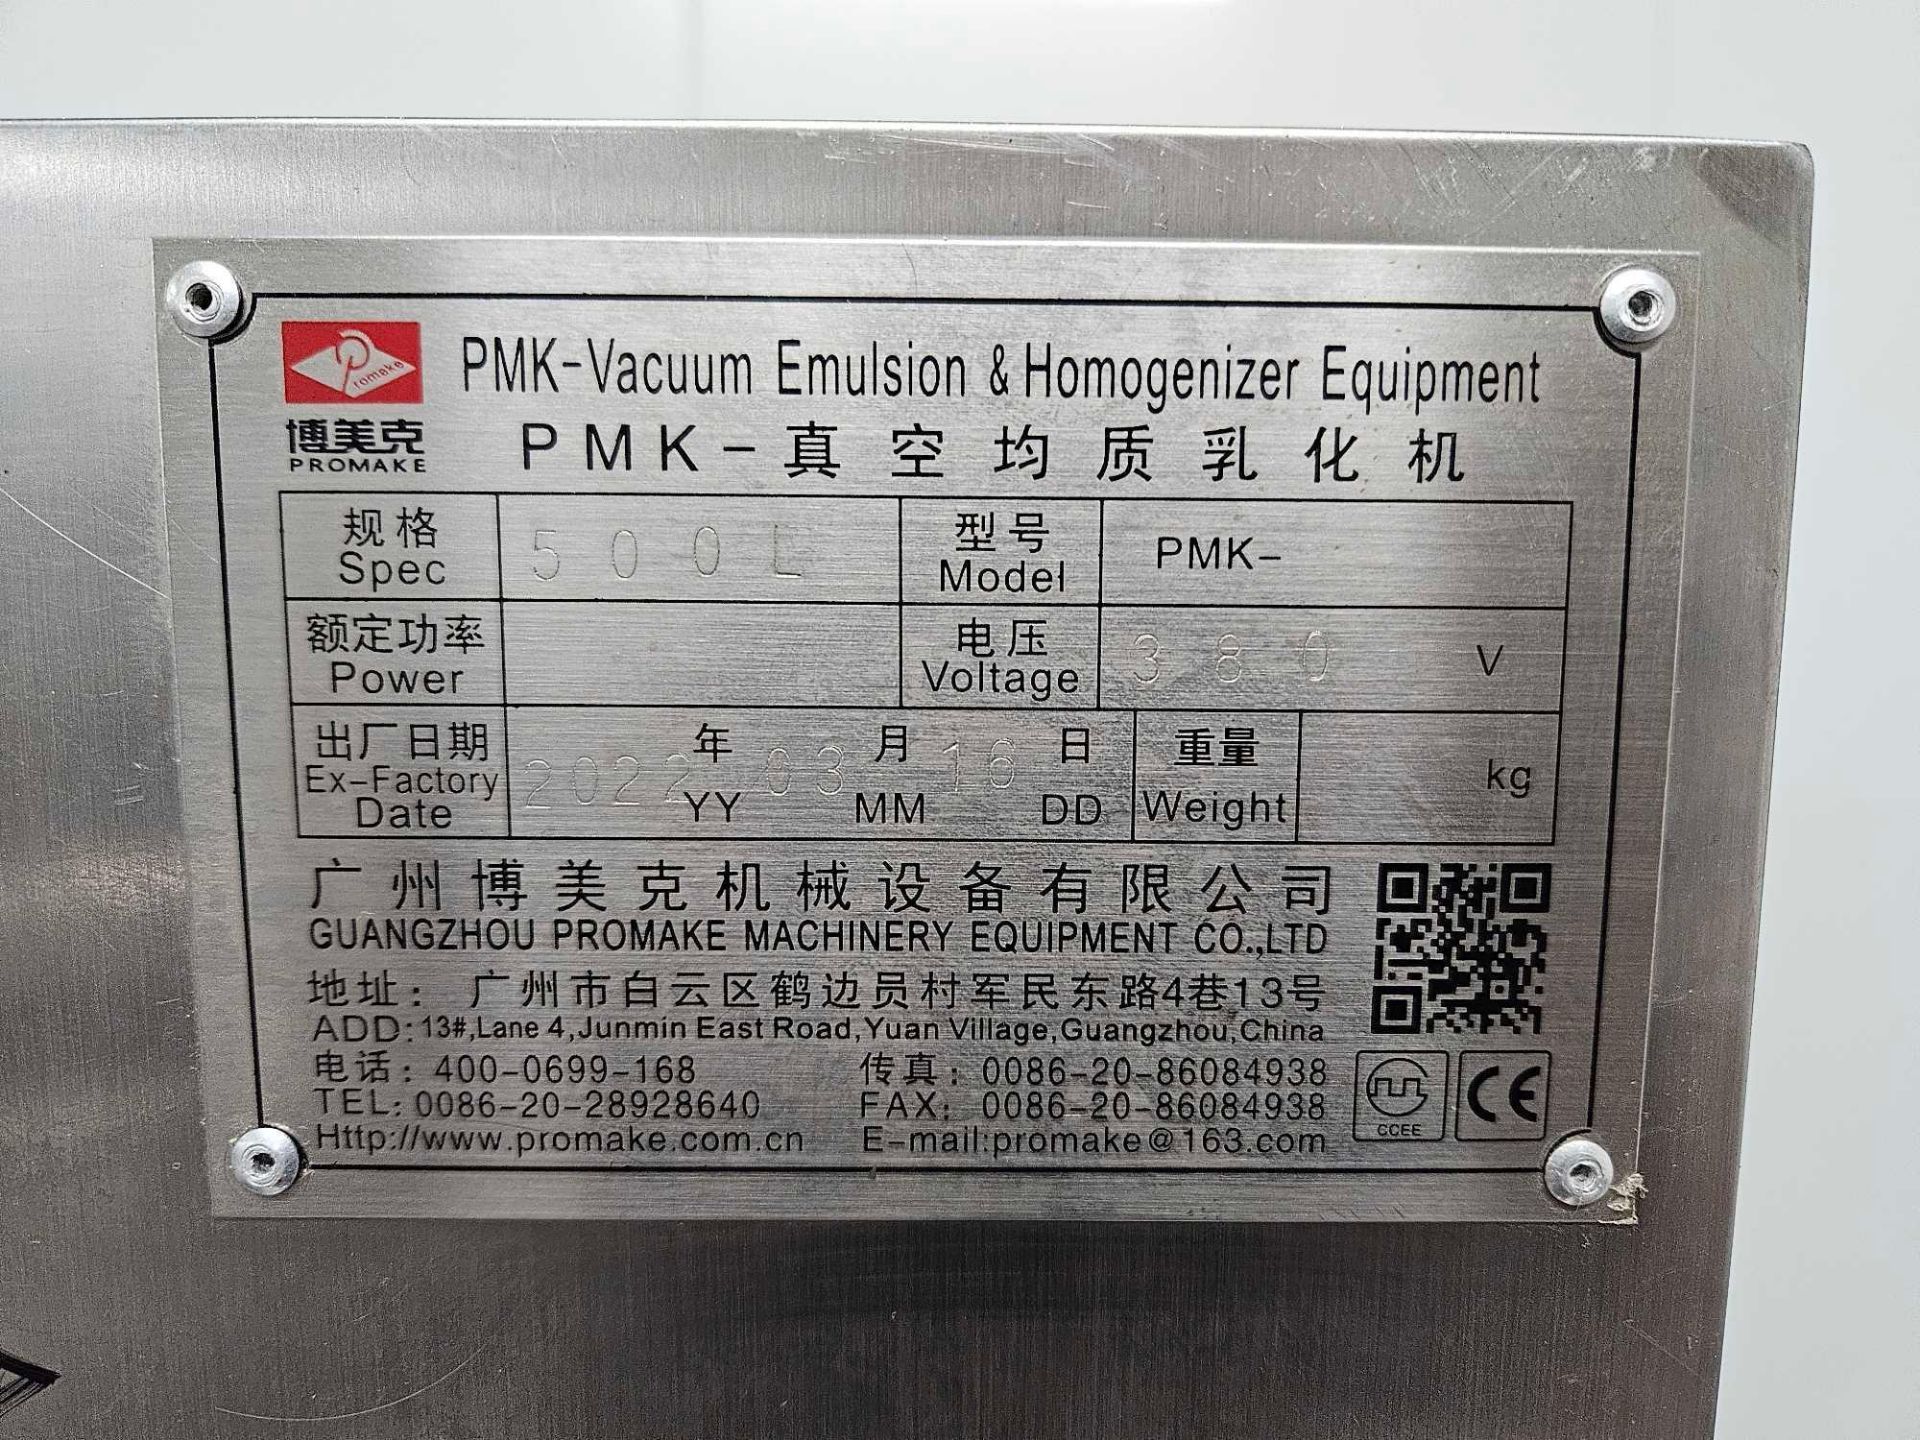 New 500 liter Vacuum Emulsion and Homogenizer System - Image 10 of 15